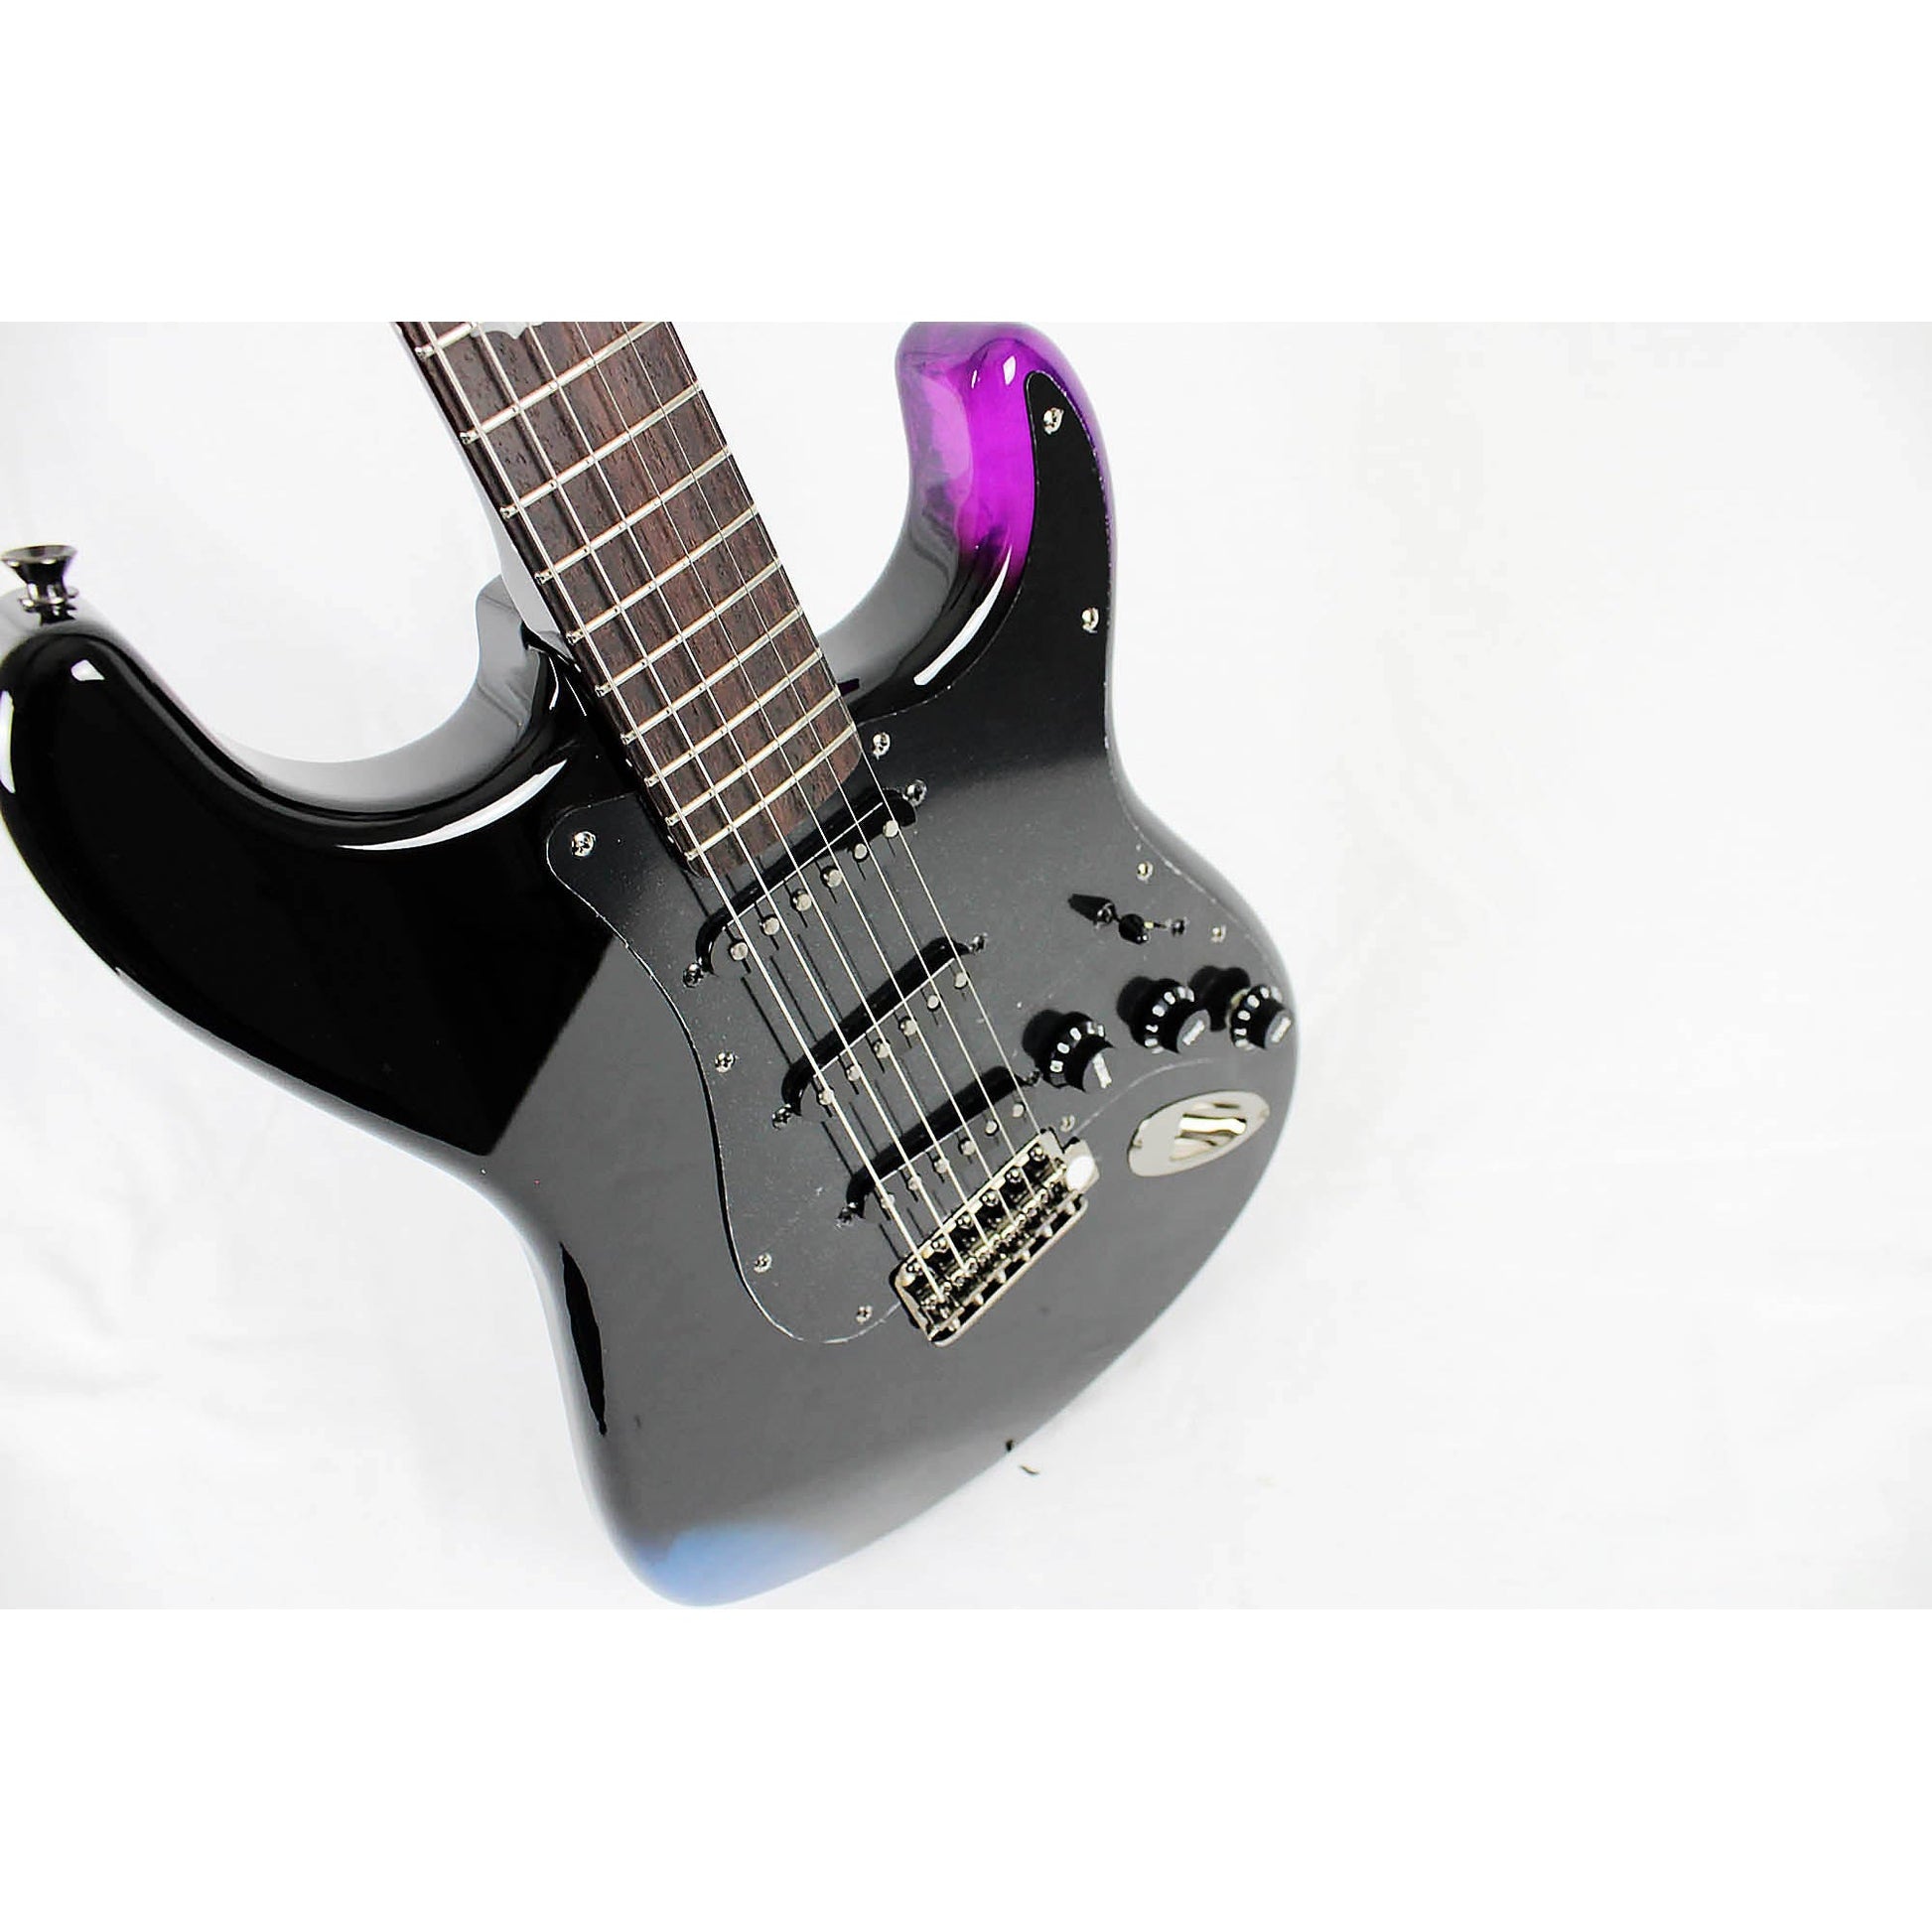 Fender Made in Japan Final Fantasy XIV Stratocaster - Black - Leitz Music-885978894291-5601000899